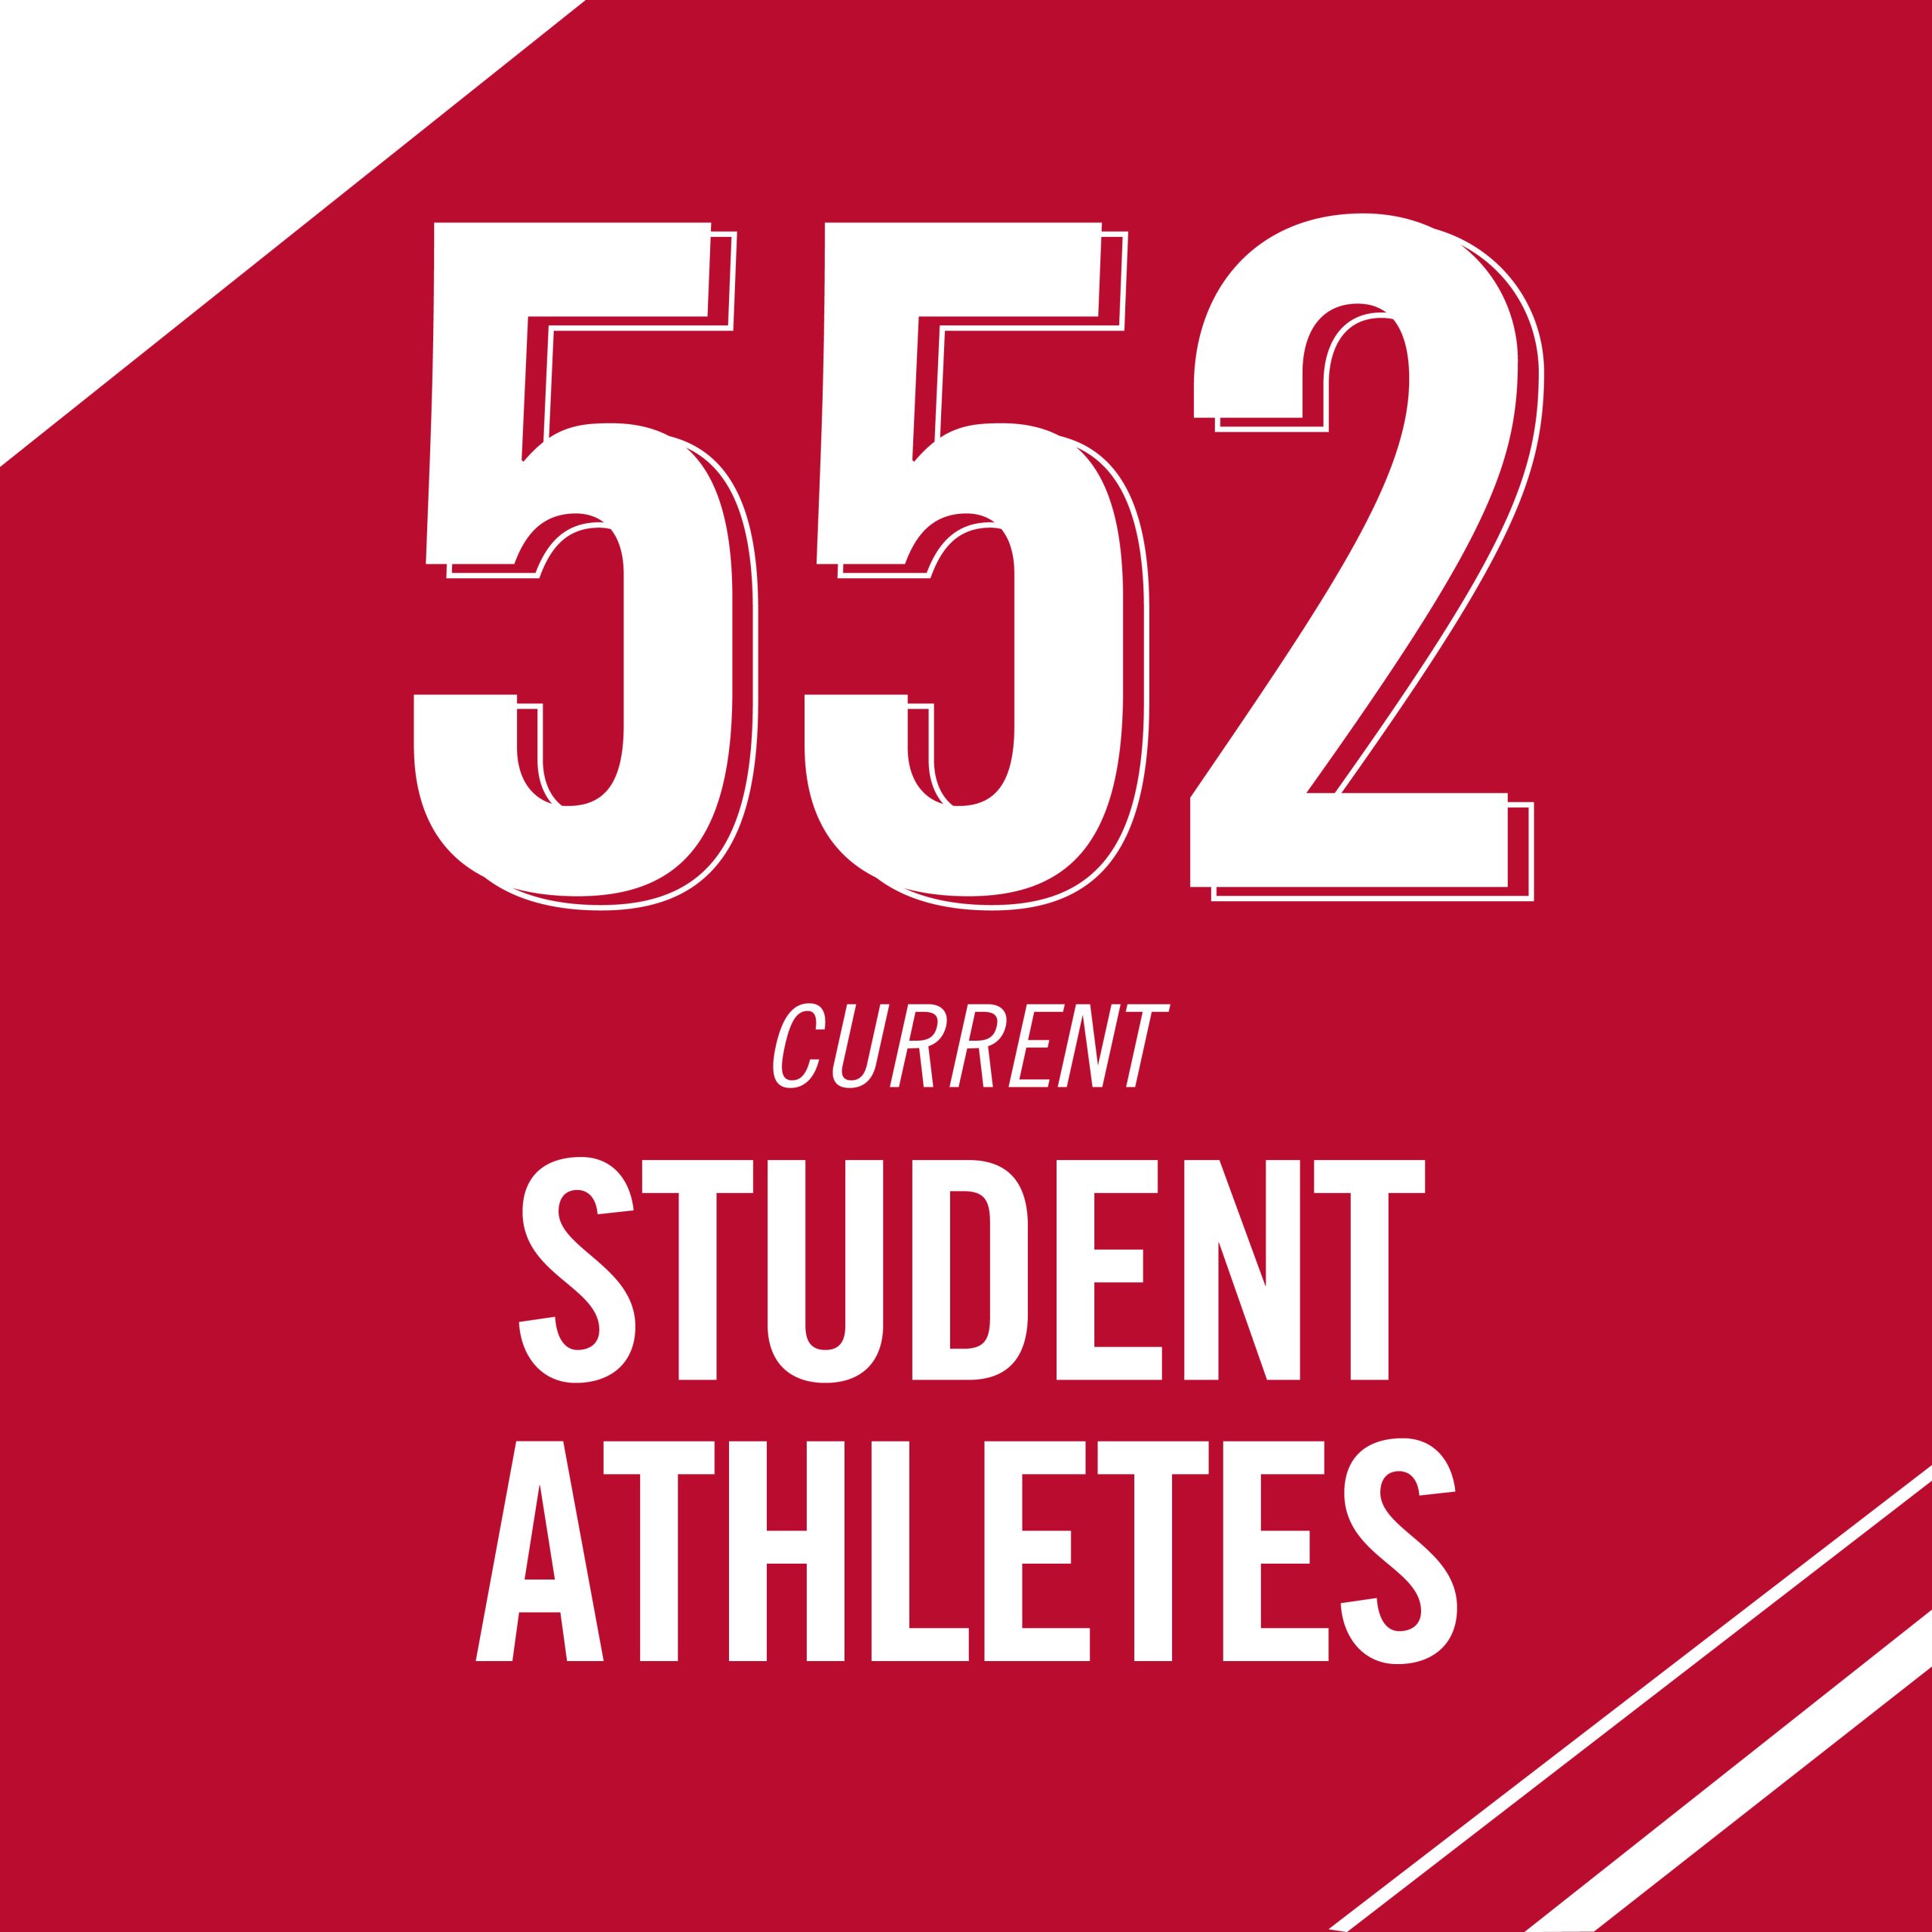 Graphic: 552 current student athletes